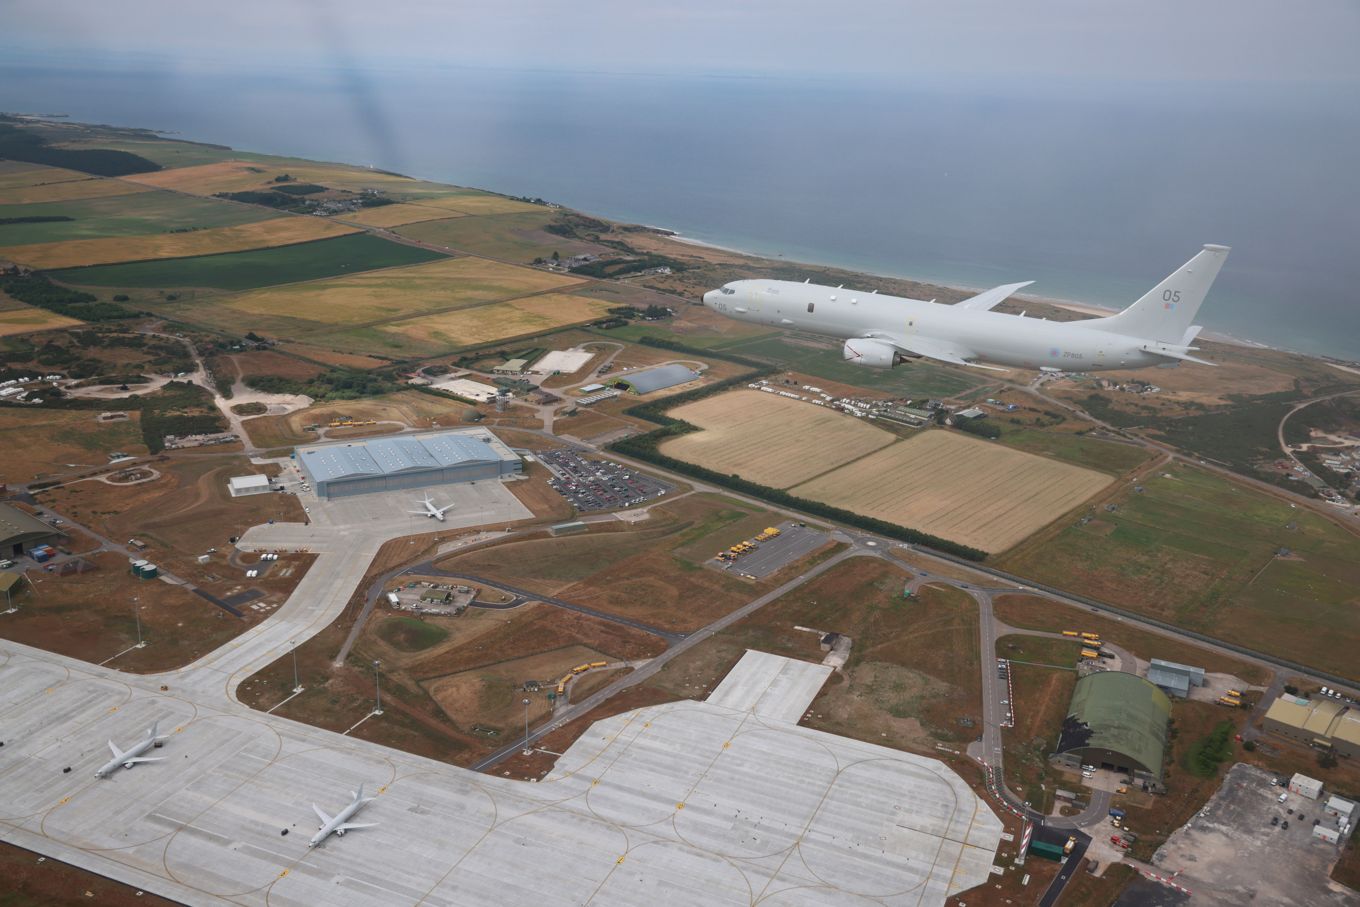 Poseidon in flight over RAF Lossiemouth airfield.